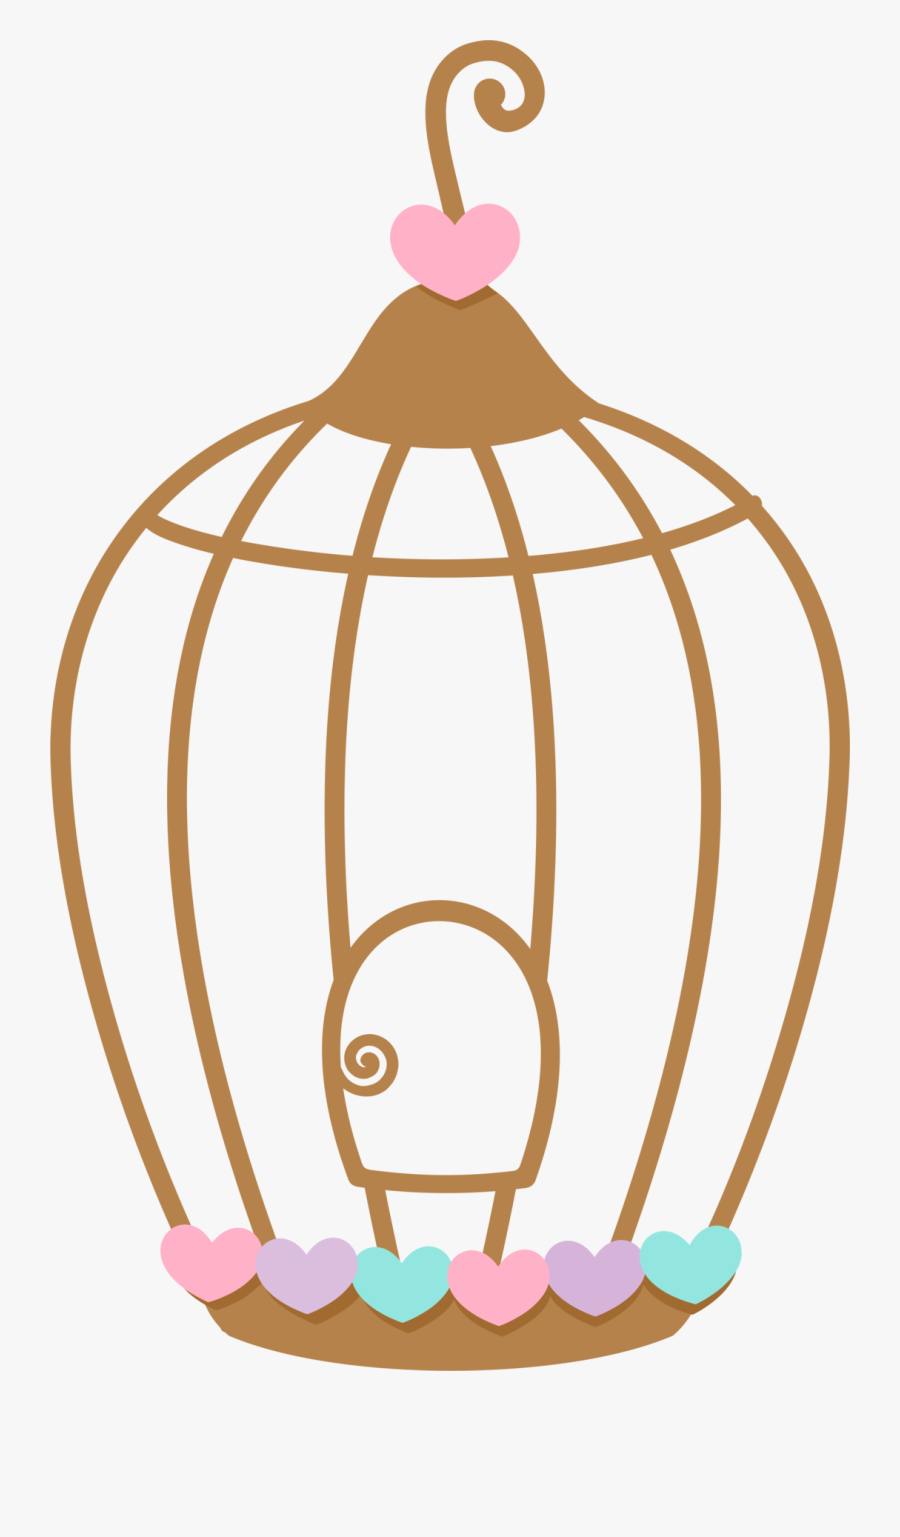 Aves Pass Ros Corujas - Bird Cage Clipart, Transparent Clipart